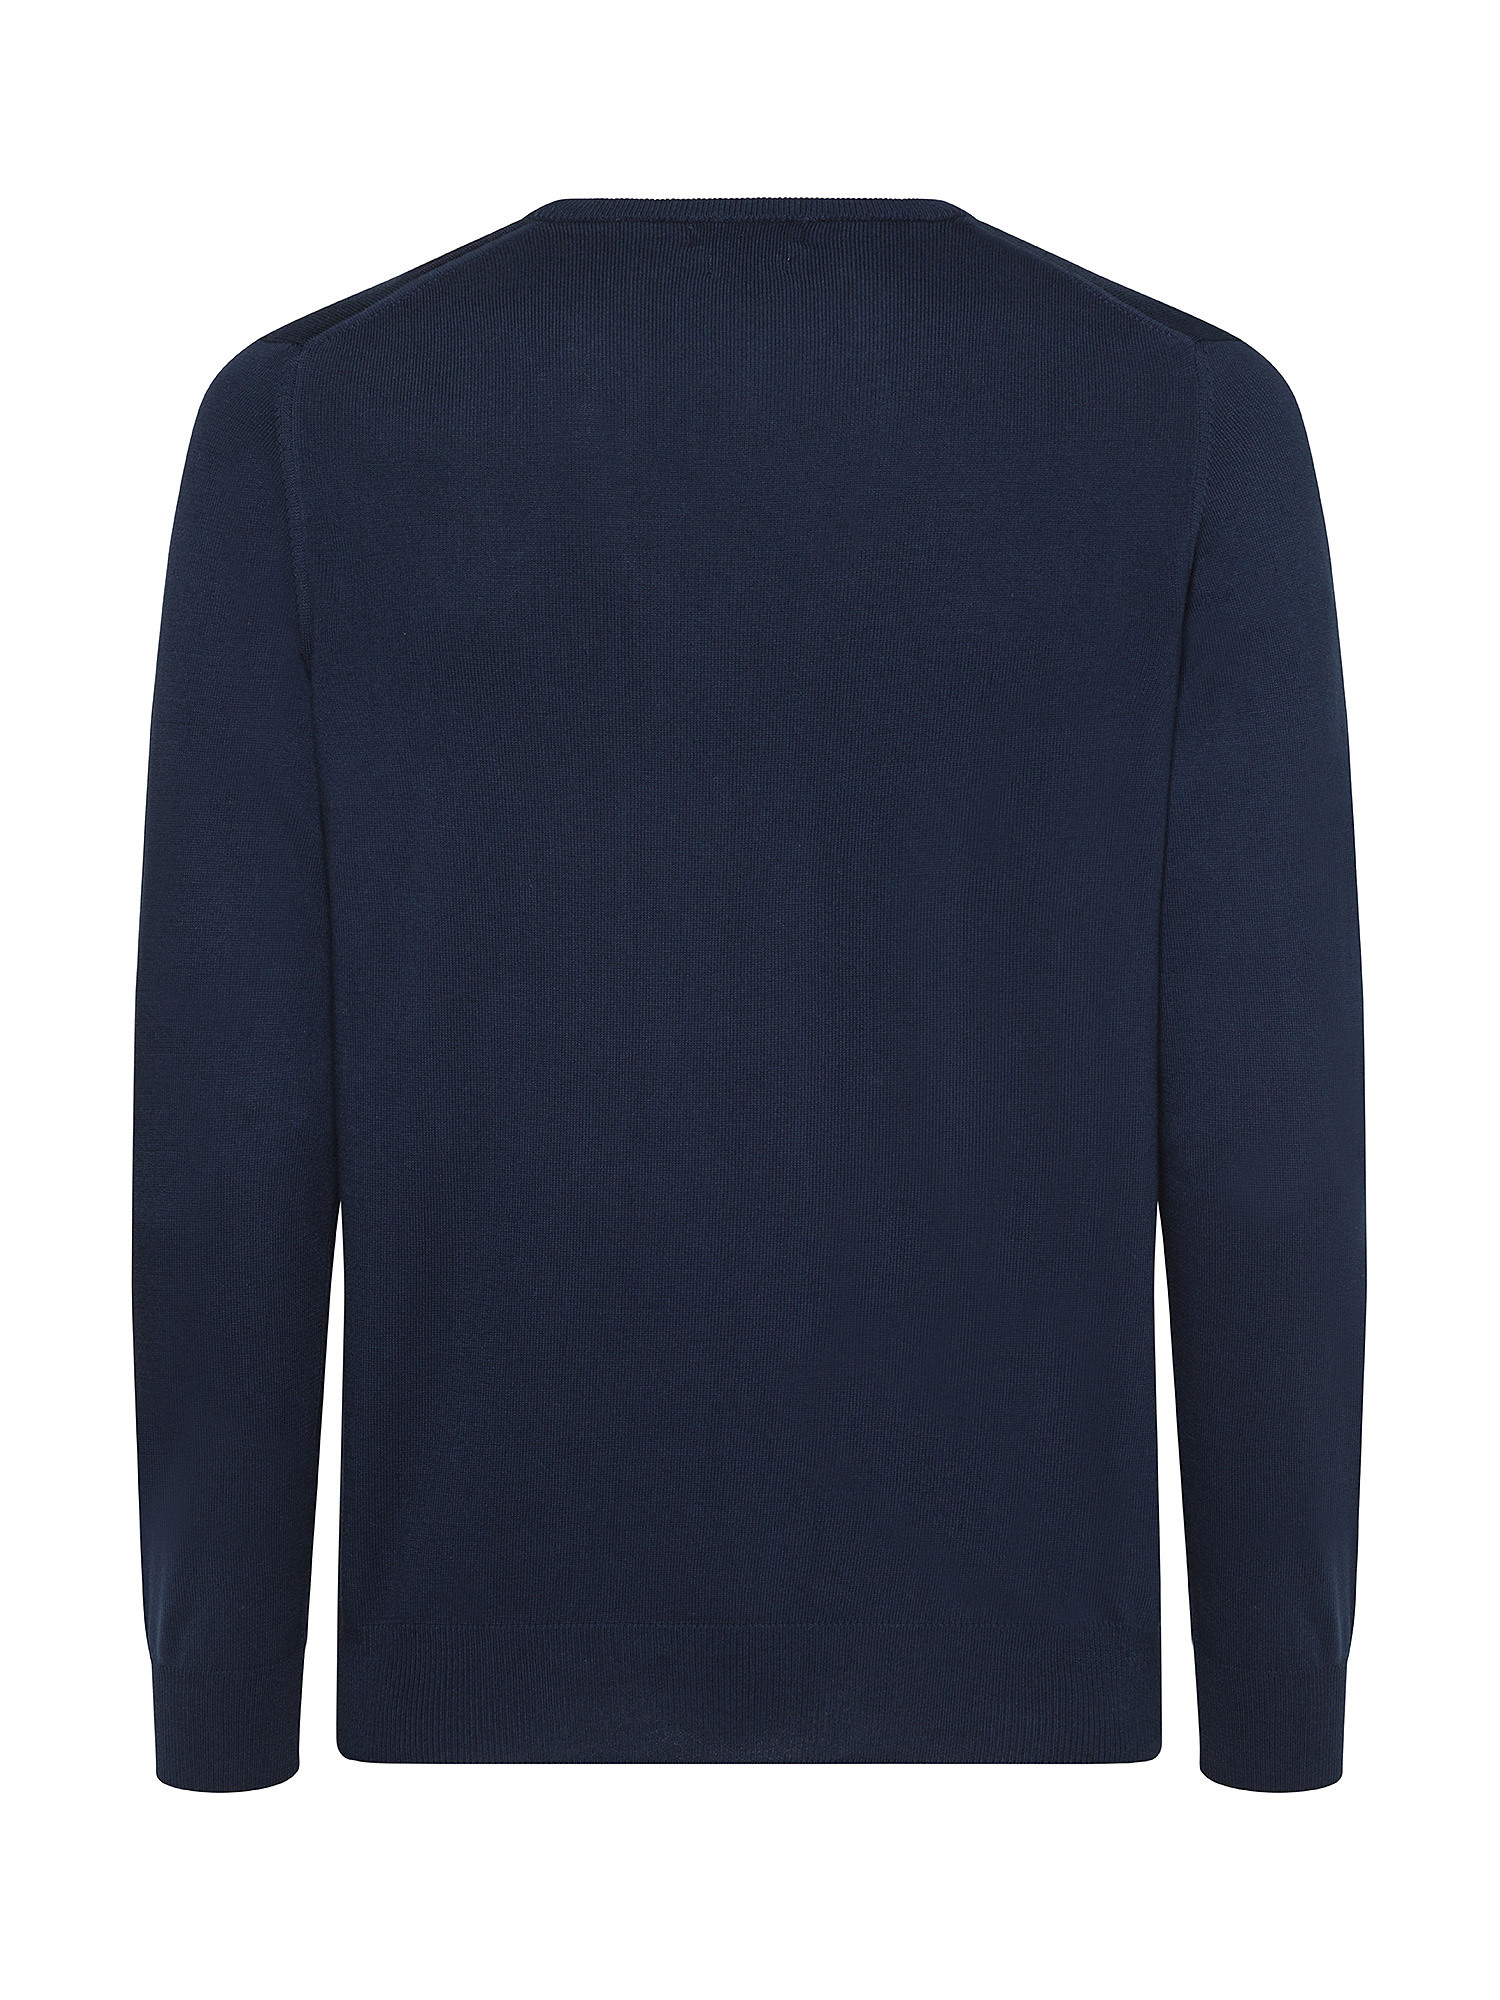 Luca D'Altieri - Crew neck sweater in extrafine pure cotton, Dark Blue, large image number 1